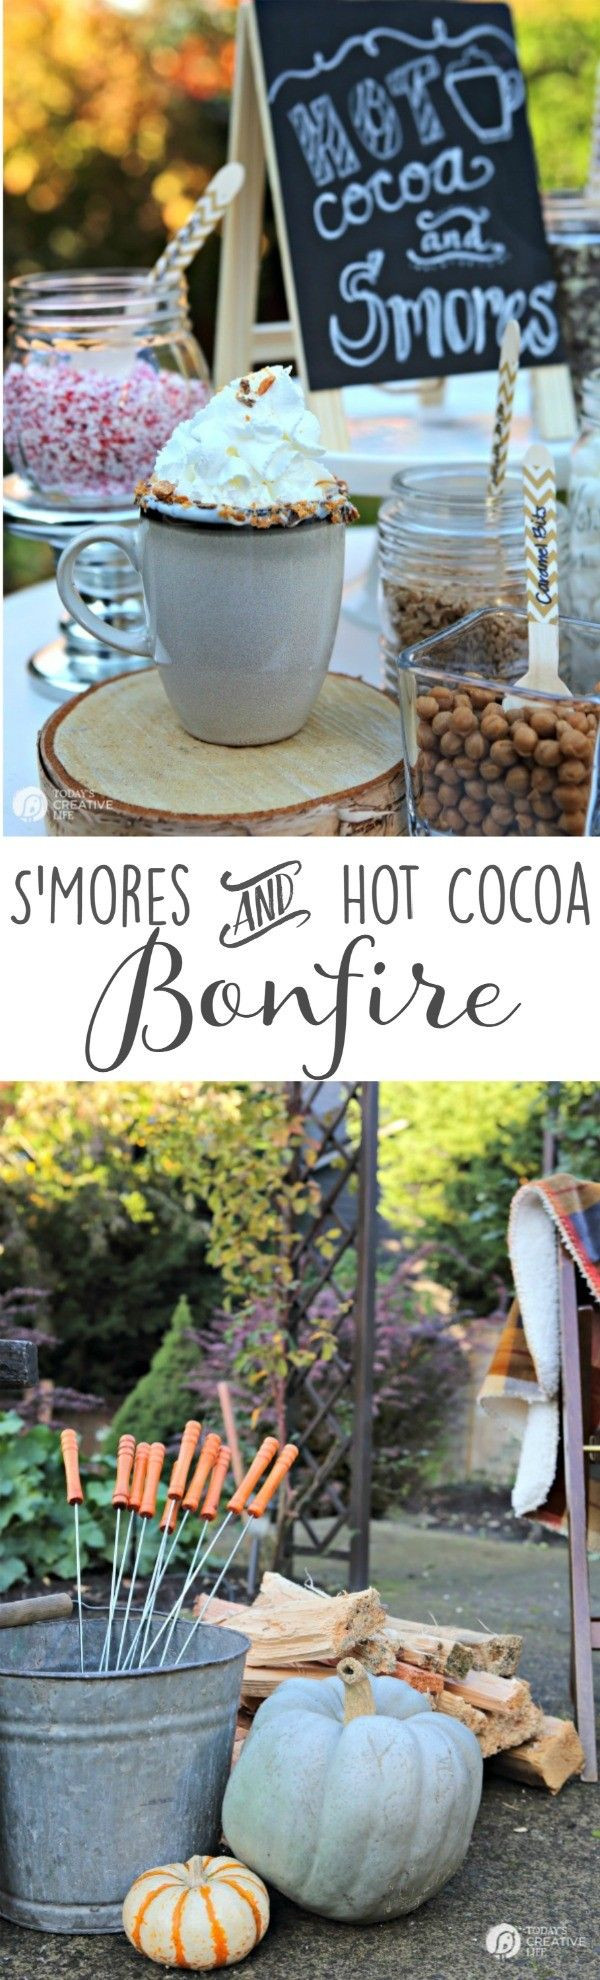 Backyard Bonfire Party Ideas
 Easy Entertaining S Mores & Hot Cocoa Bonfire Back yard